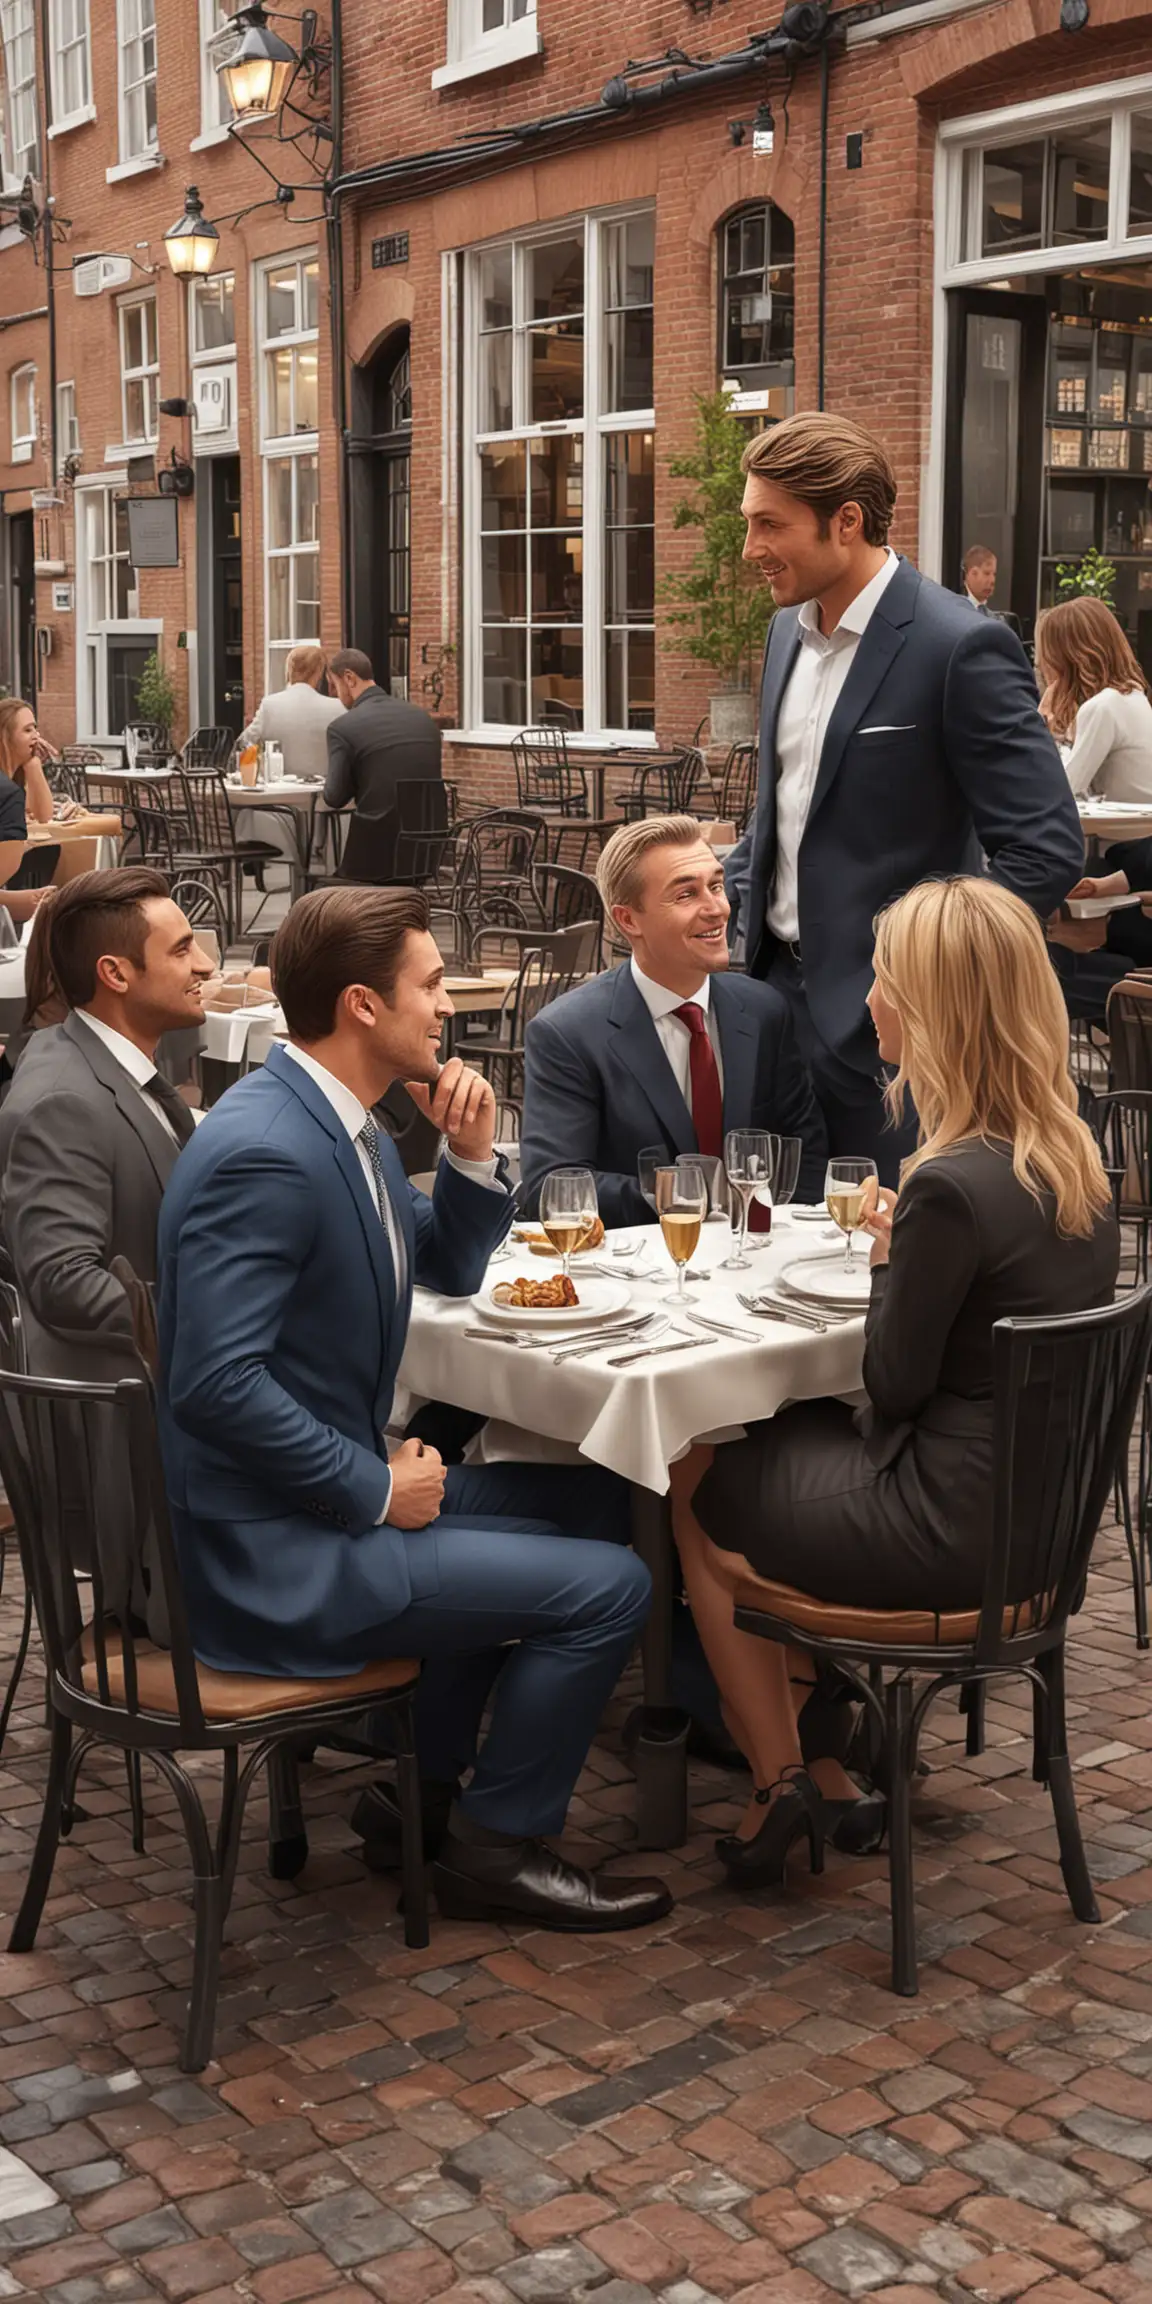 Amsterdam City Restaurant Business Meeting Realism Illustration of Men and Women Negotiating Deals